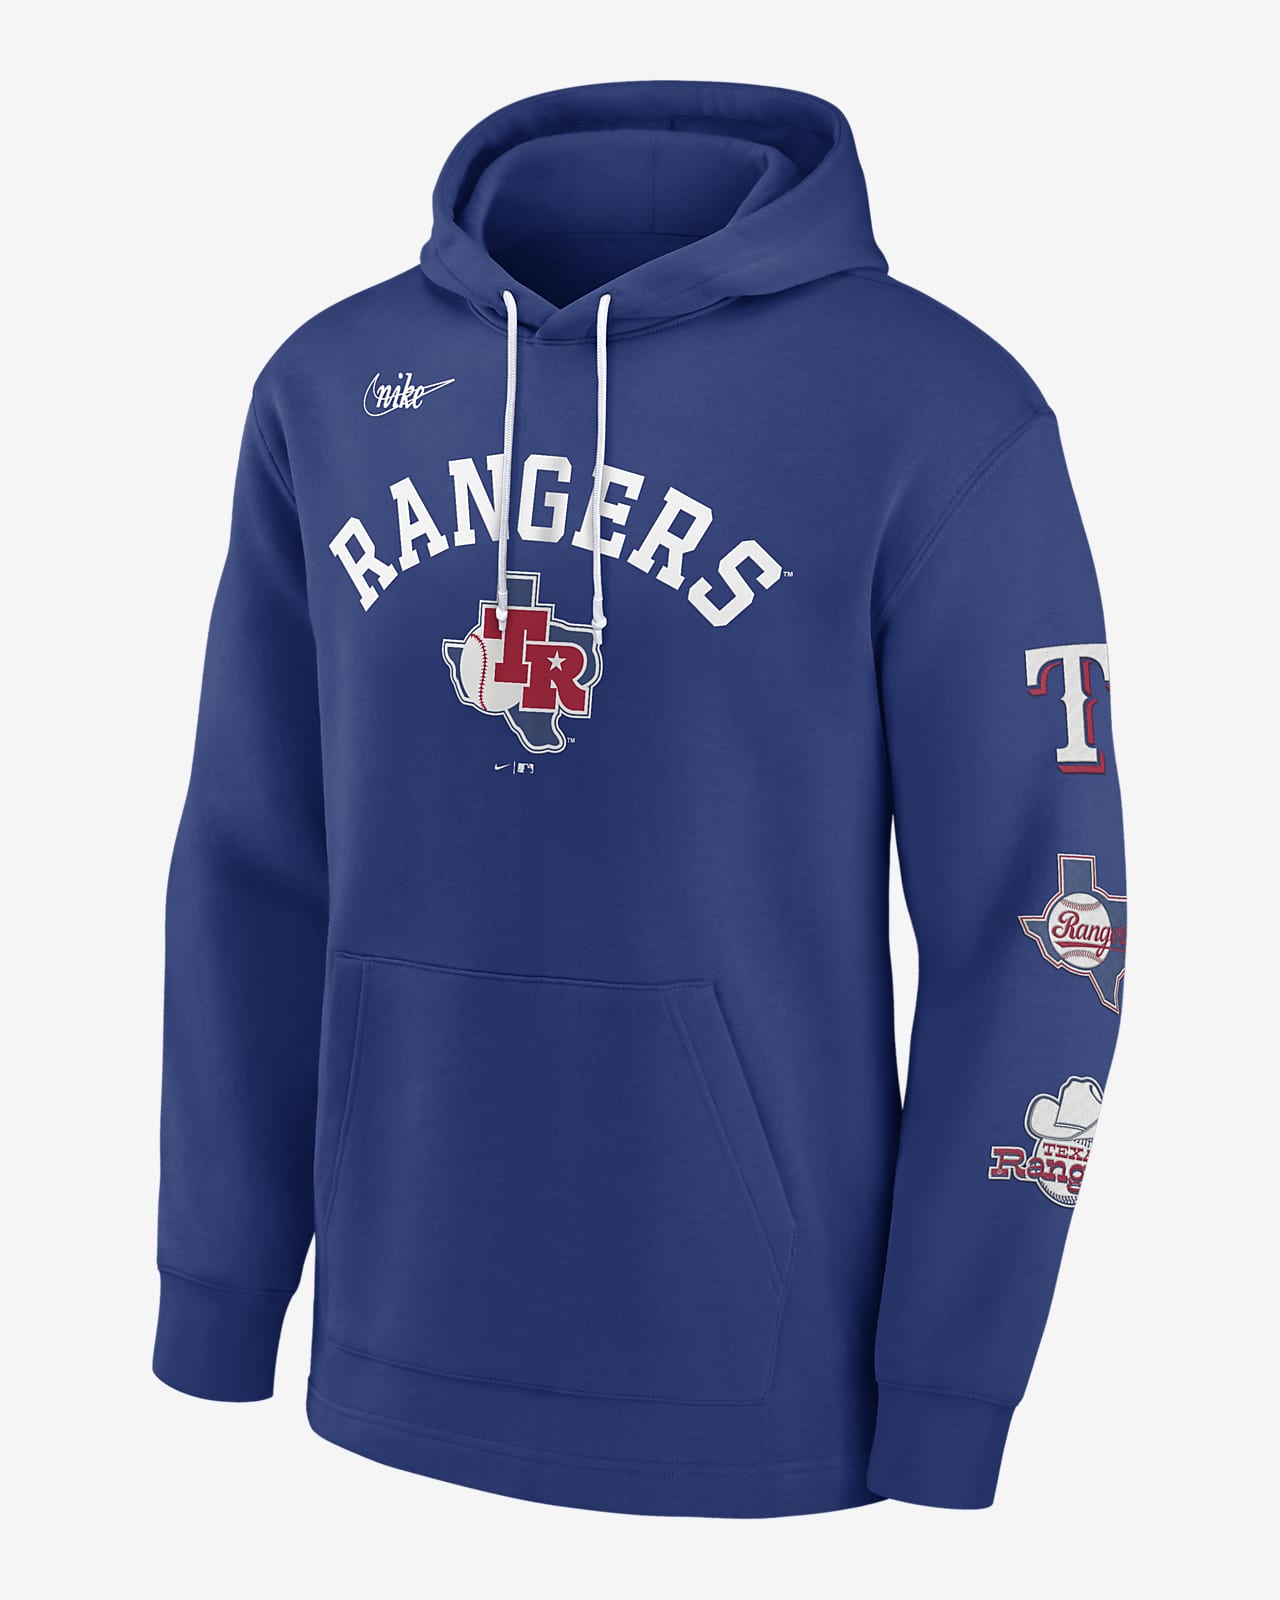 Buy Vintage Rangers Sweatshirt Online In India -  India